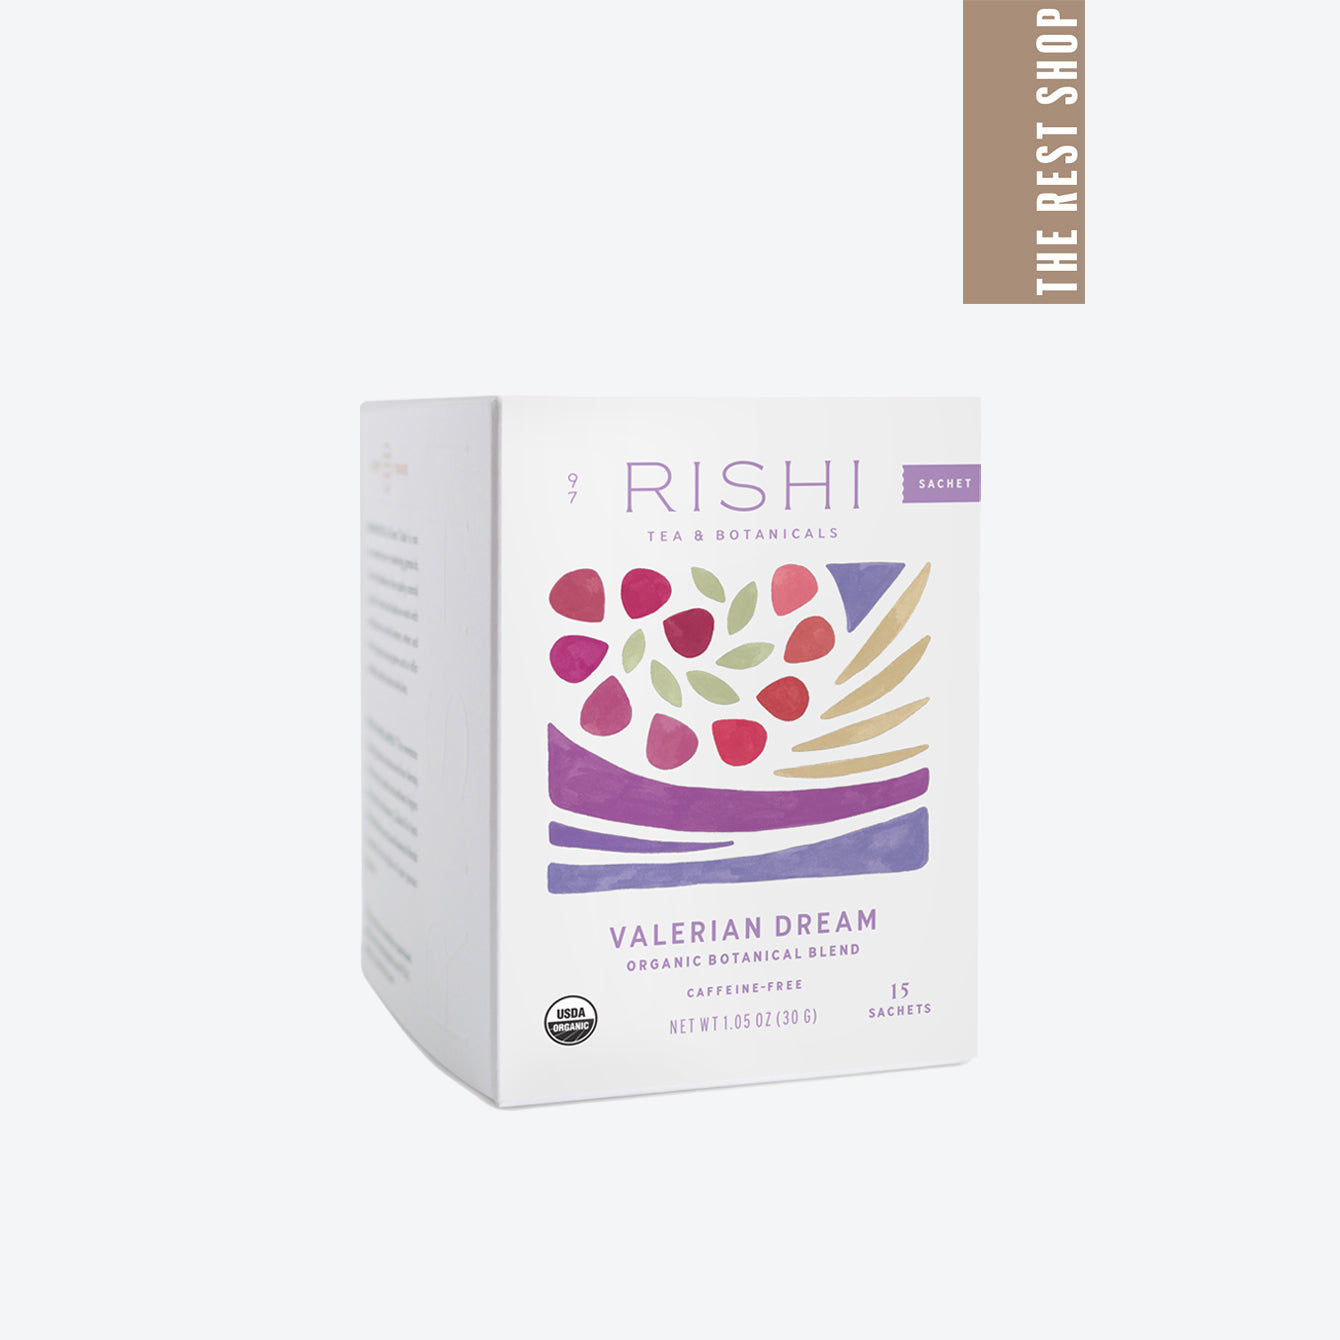 Rishi Organic Valerian Dream Tea